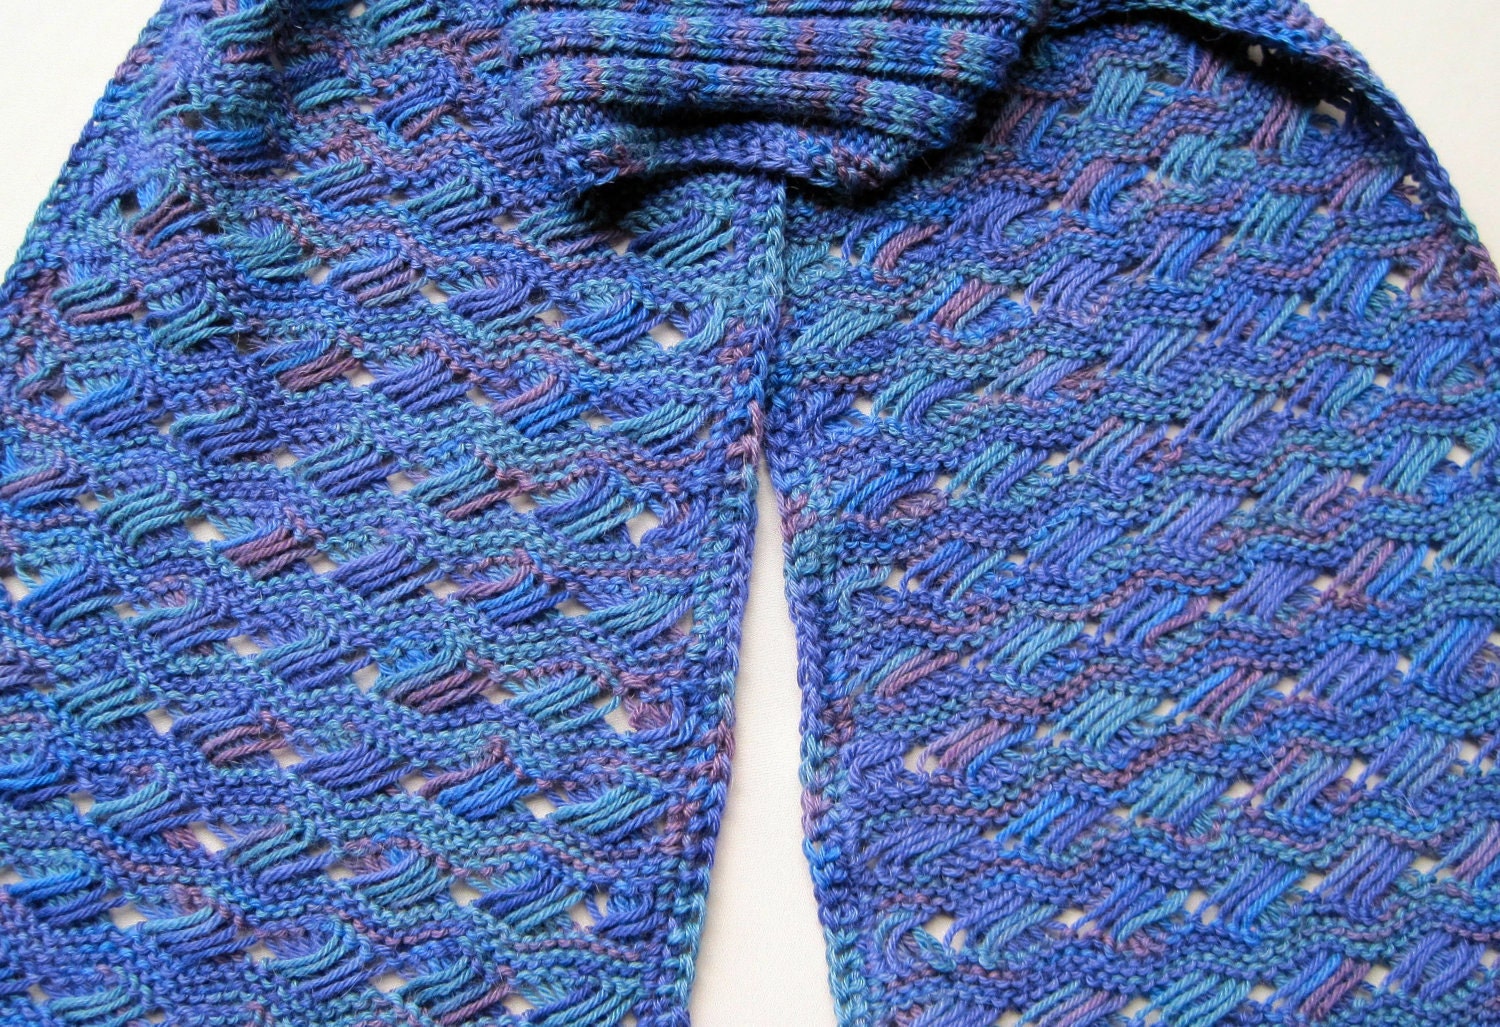 Beaded Rib - Knittin
g - Learn to Knit - Knitting Patterns